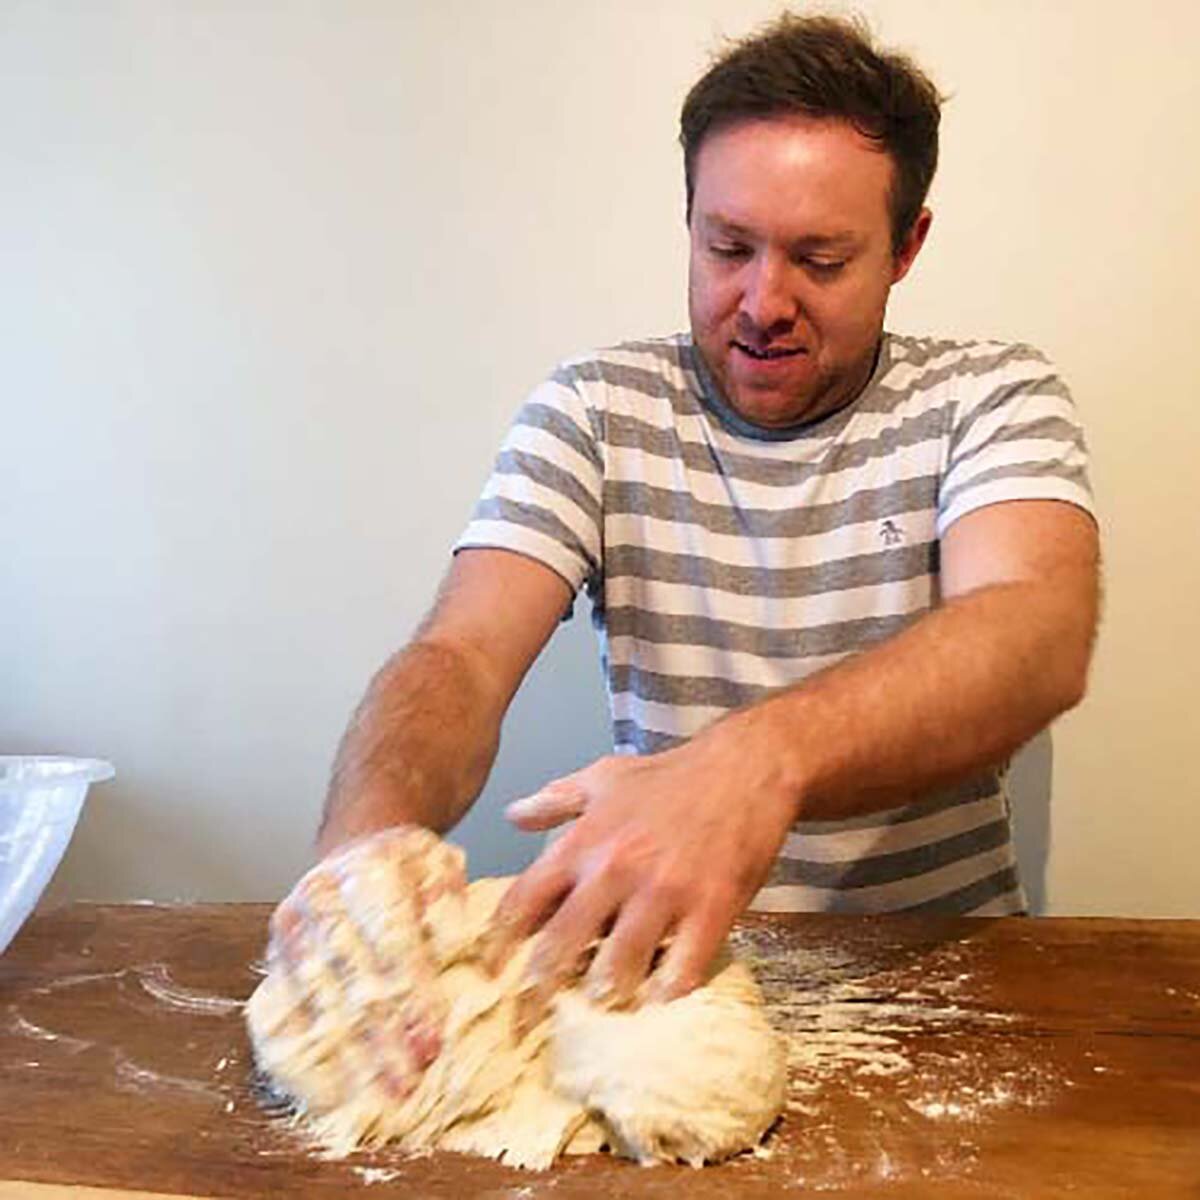 Why knead dough?